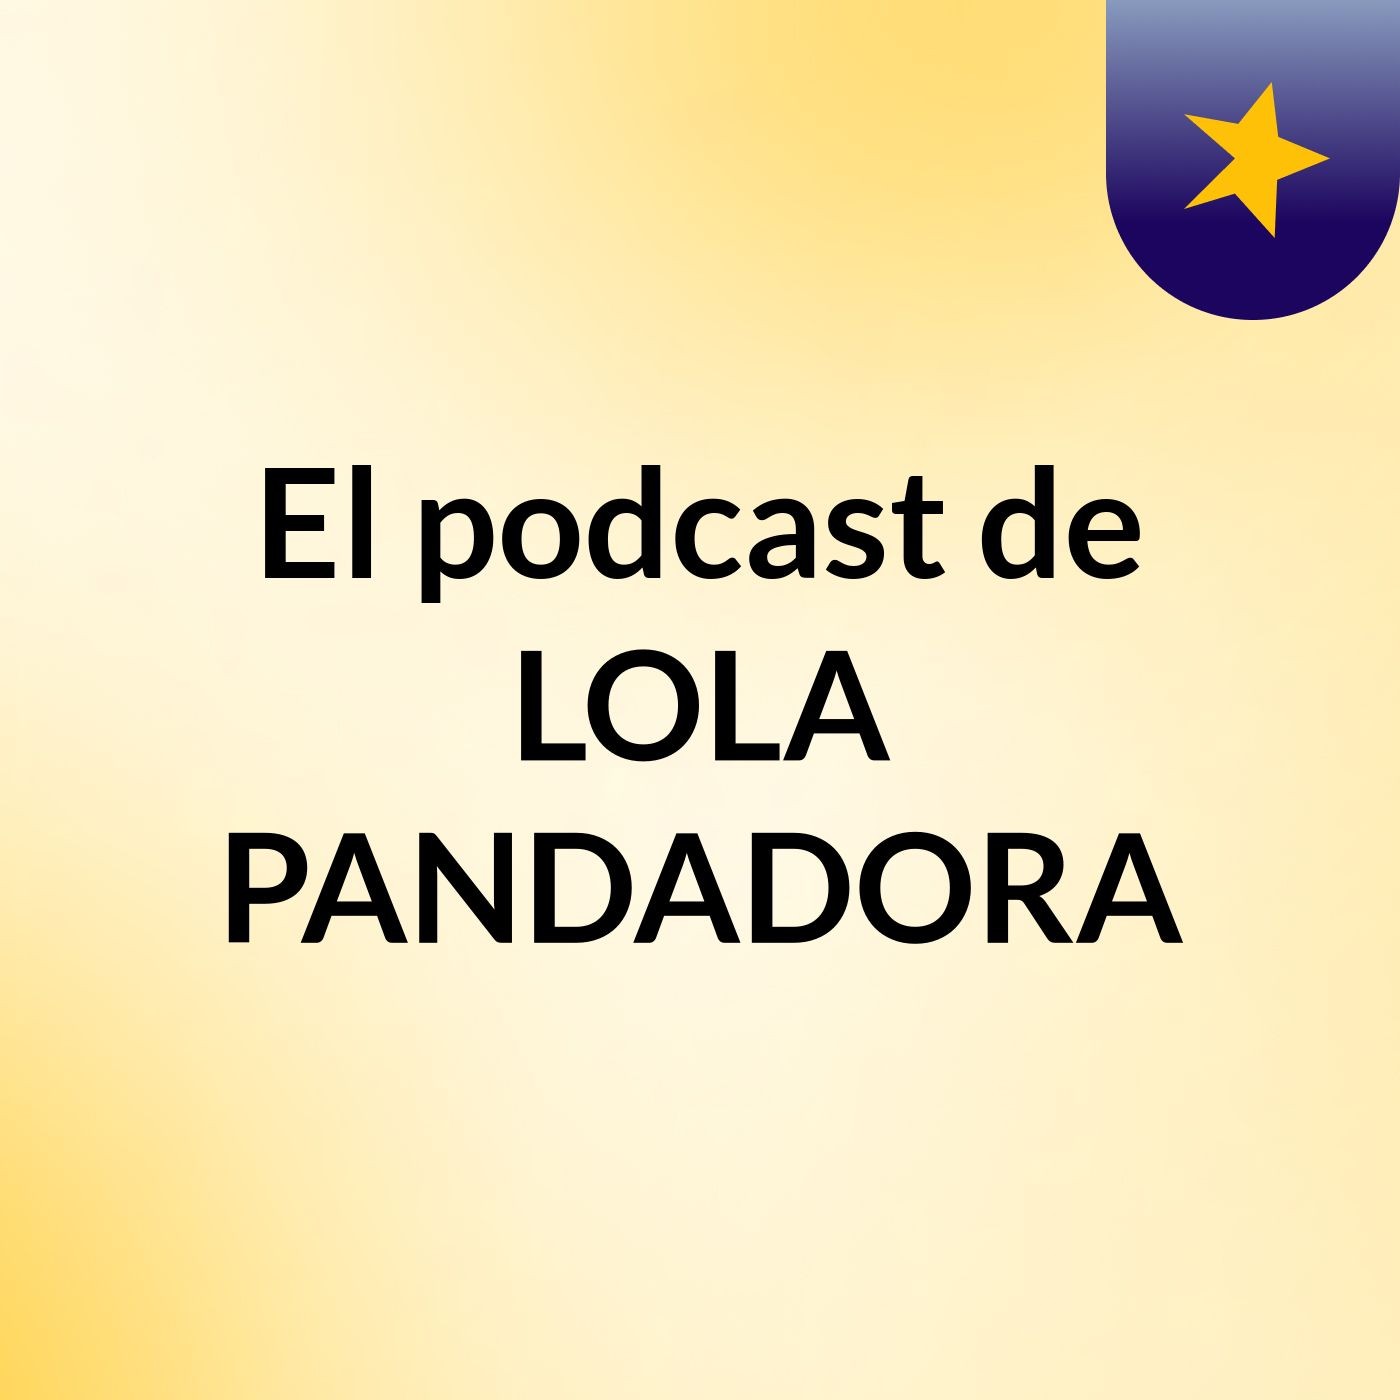 El podcast de LOLA PANDADORA